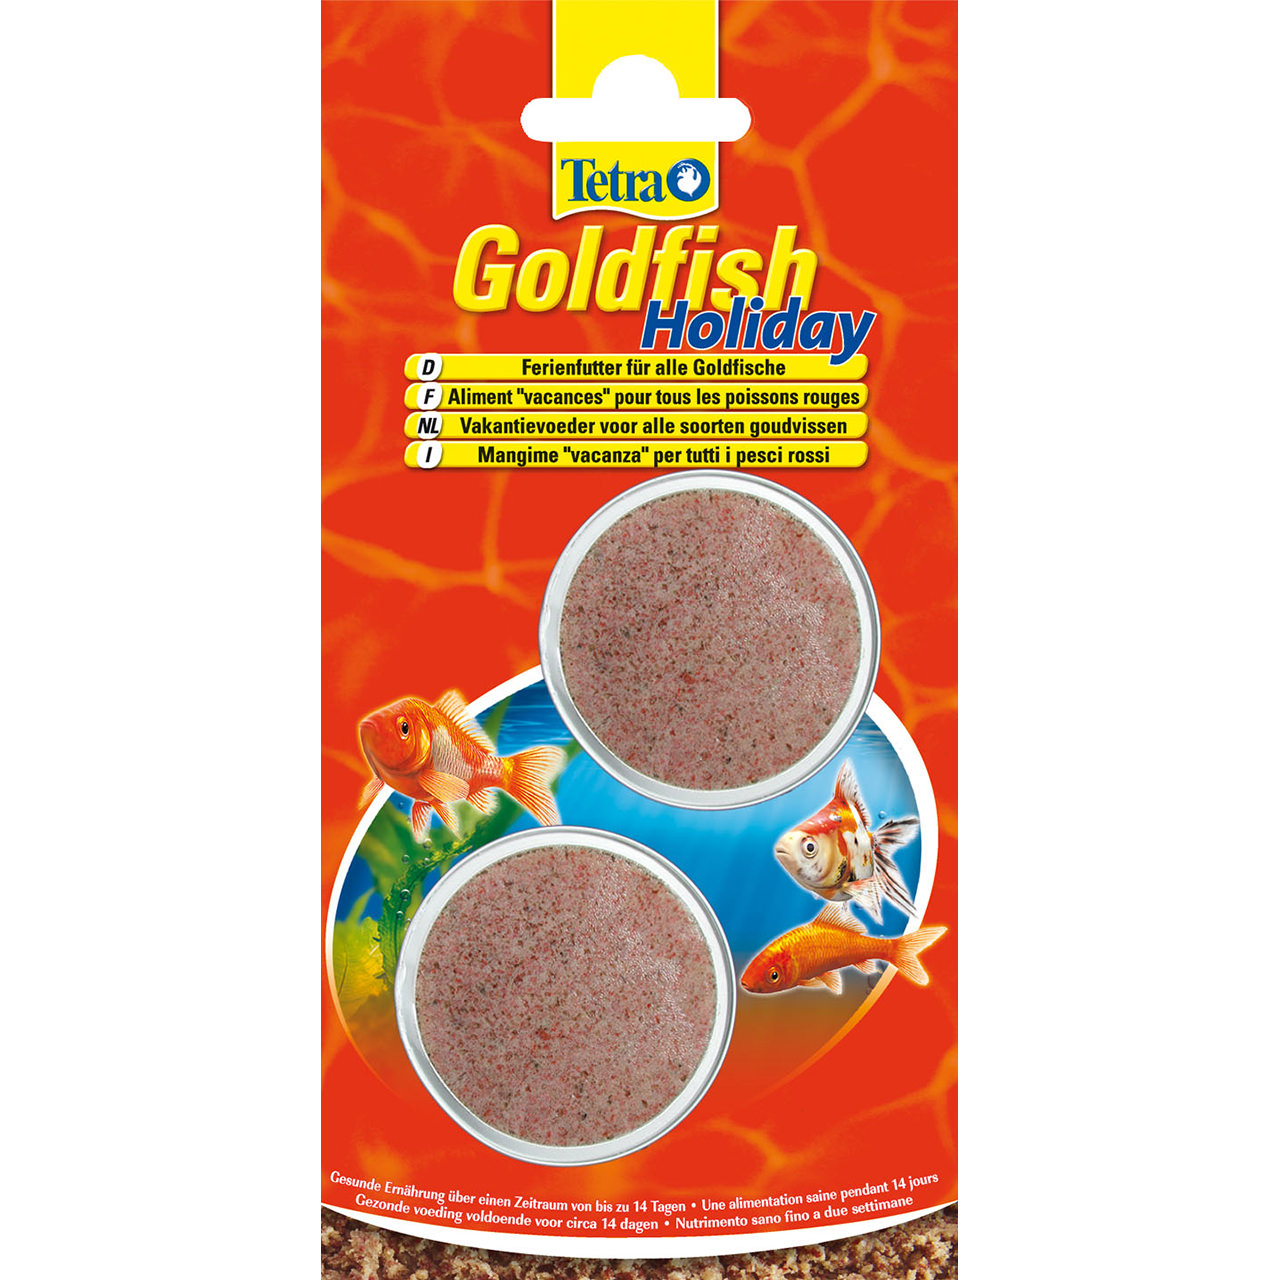 Tetra Goldfish Holiday Ferienfutter